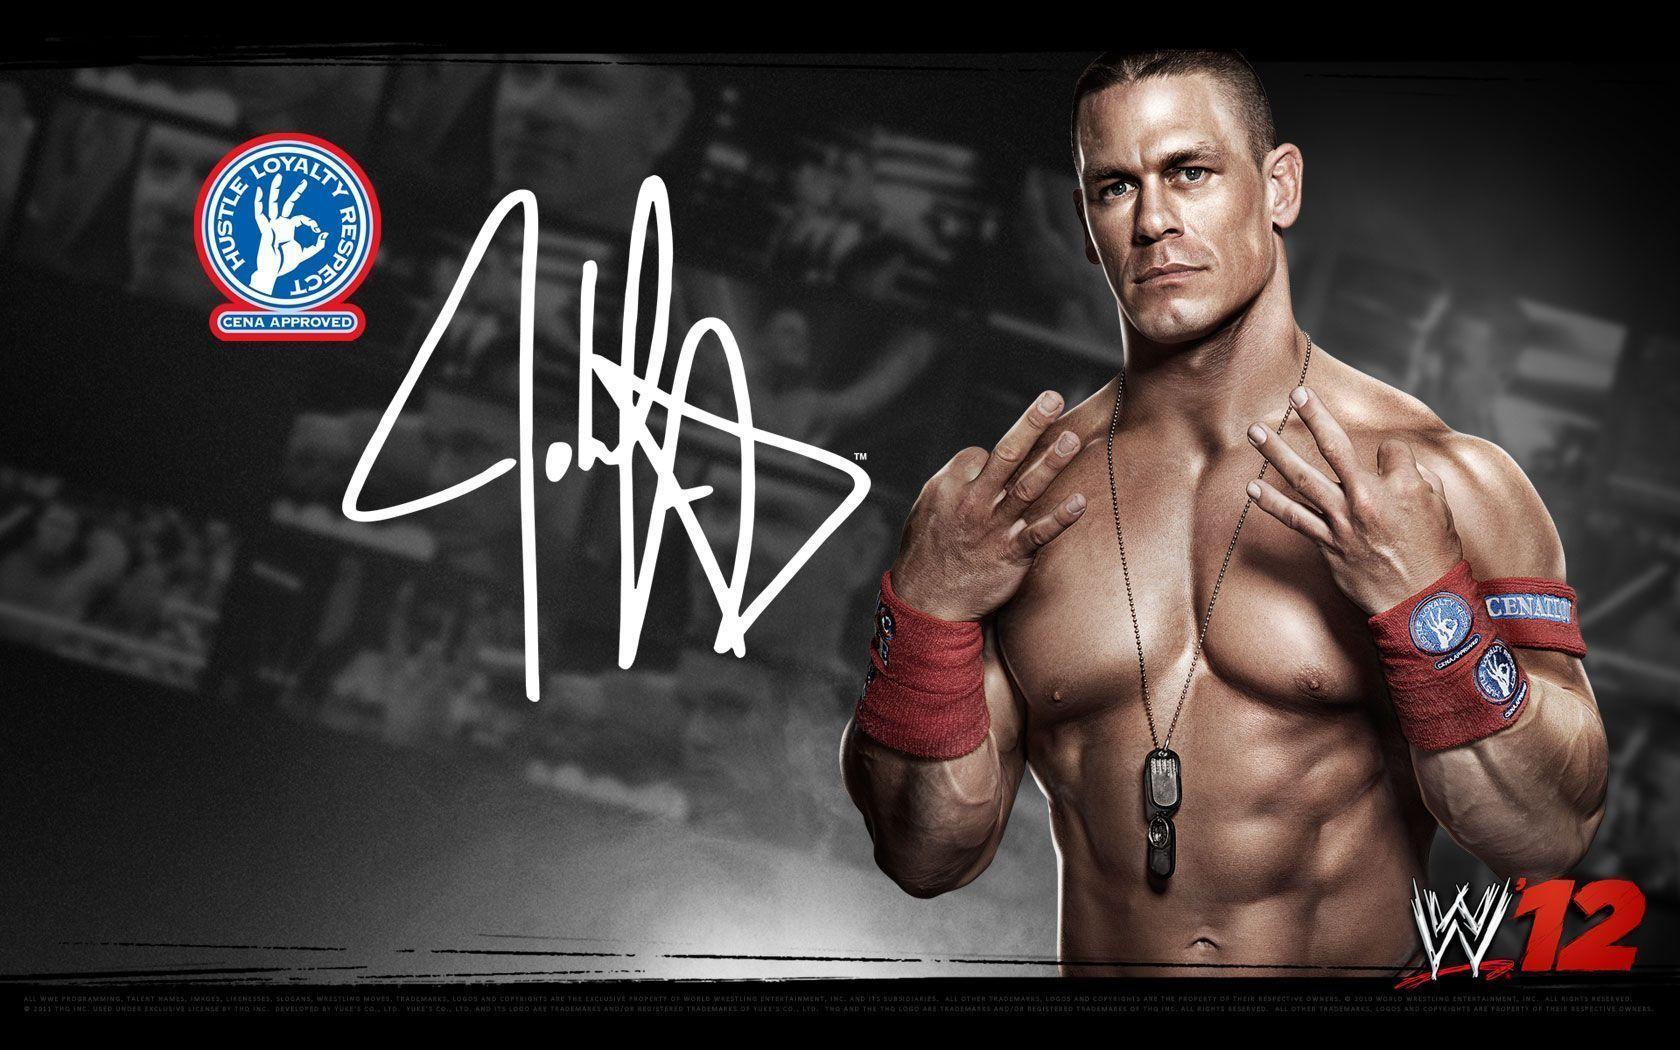 WWE Image WWE 13 John Cena Wallpaper And Background Photo